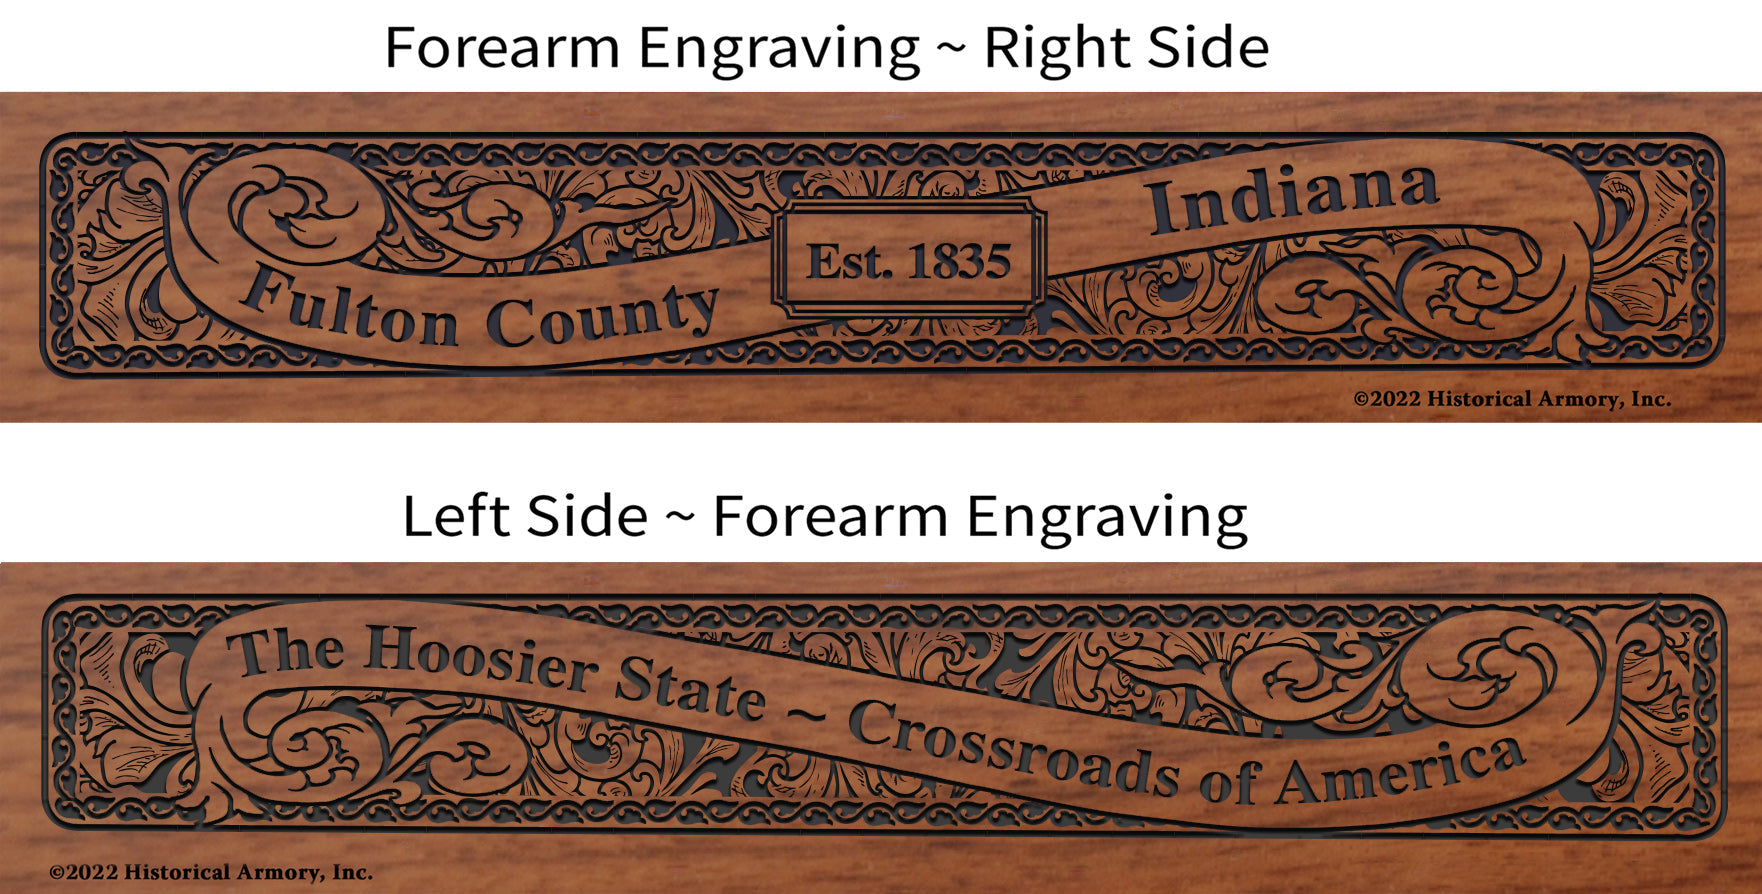 Fulton County Indiana Engraved Rifle Forearm